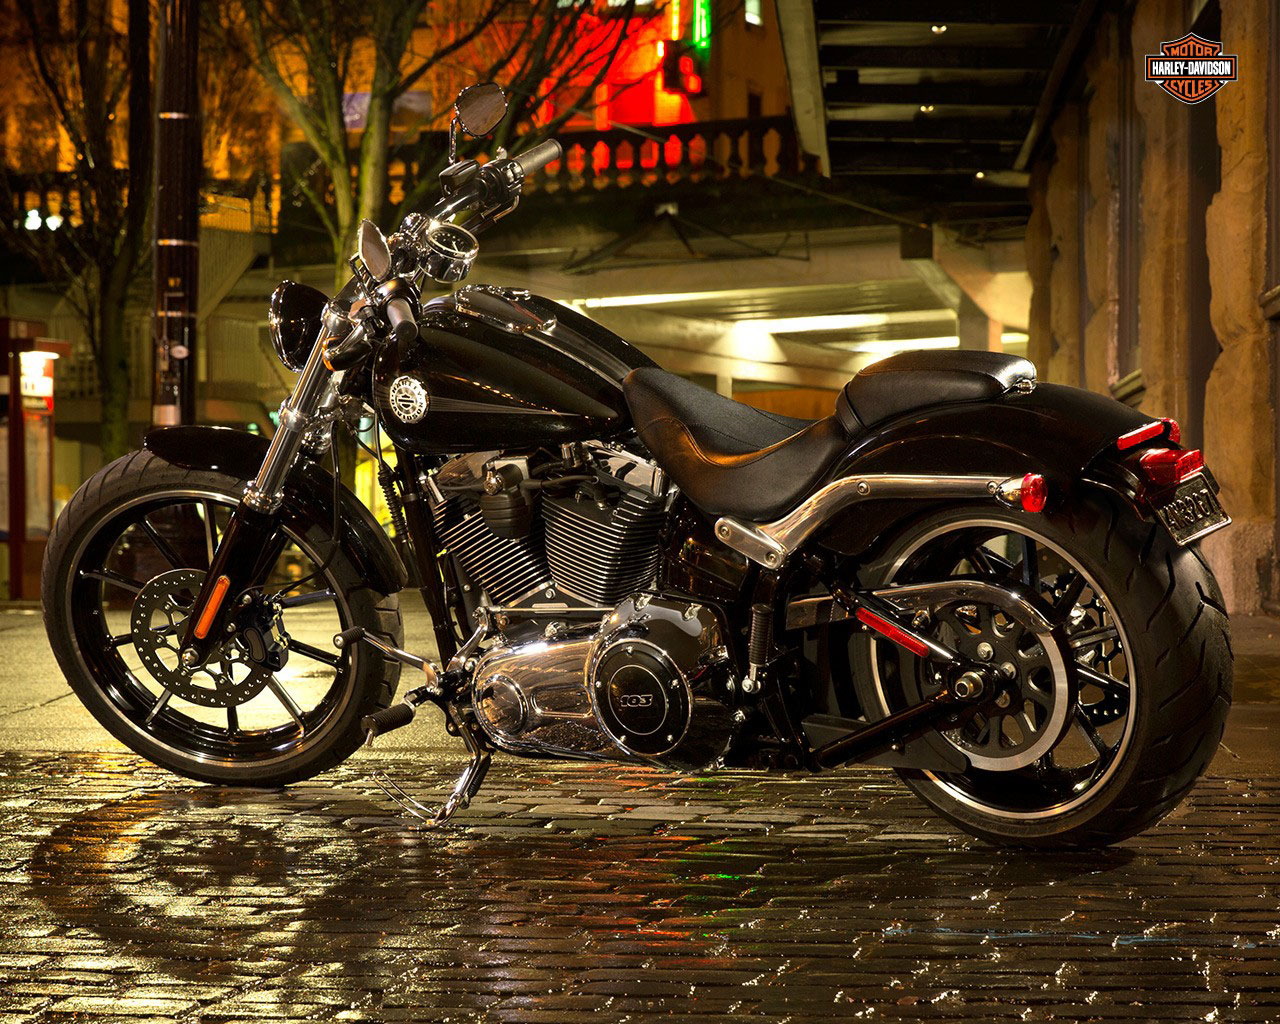 2015 Harley Davidson Fxsb Breakout Review